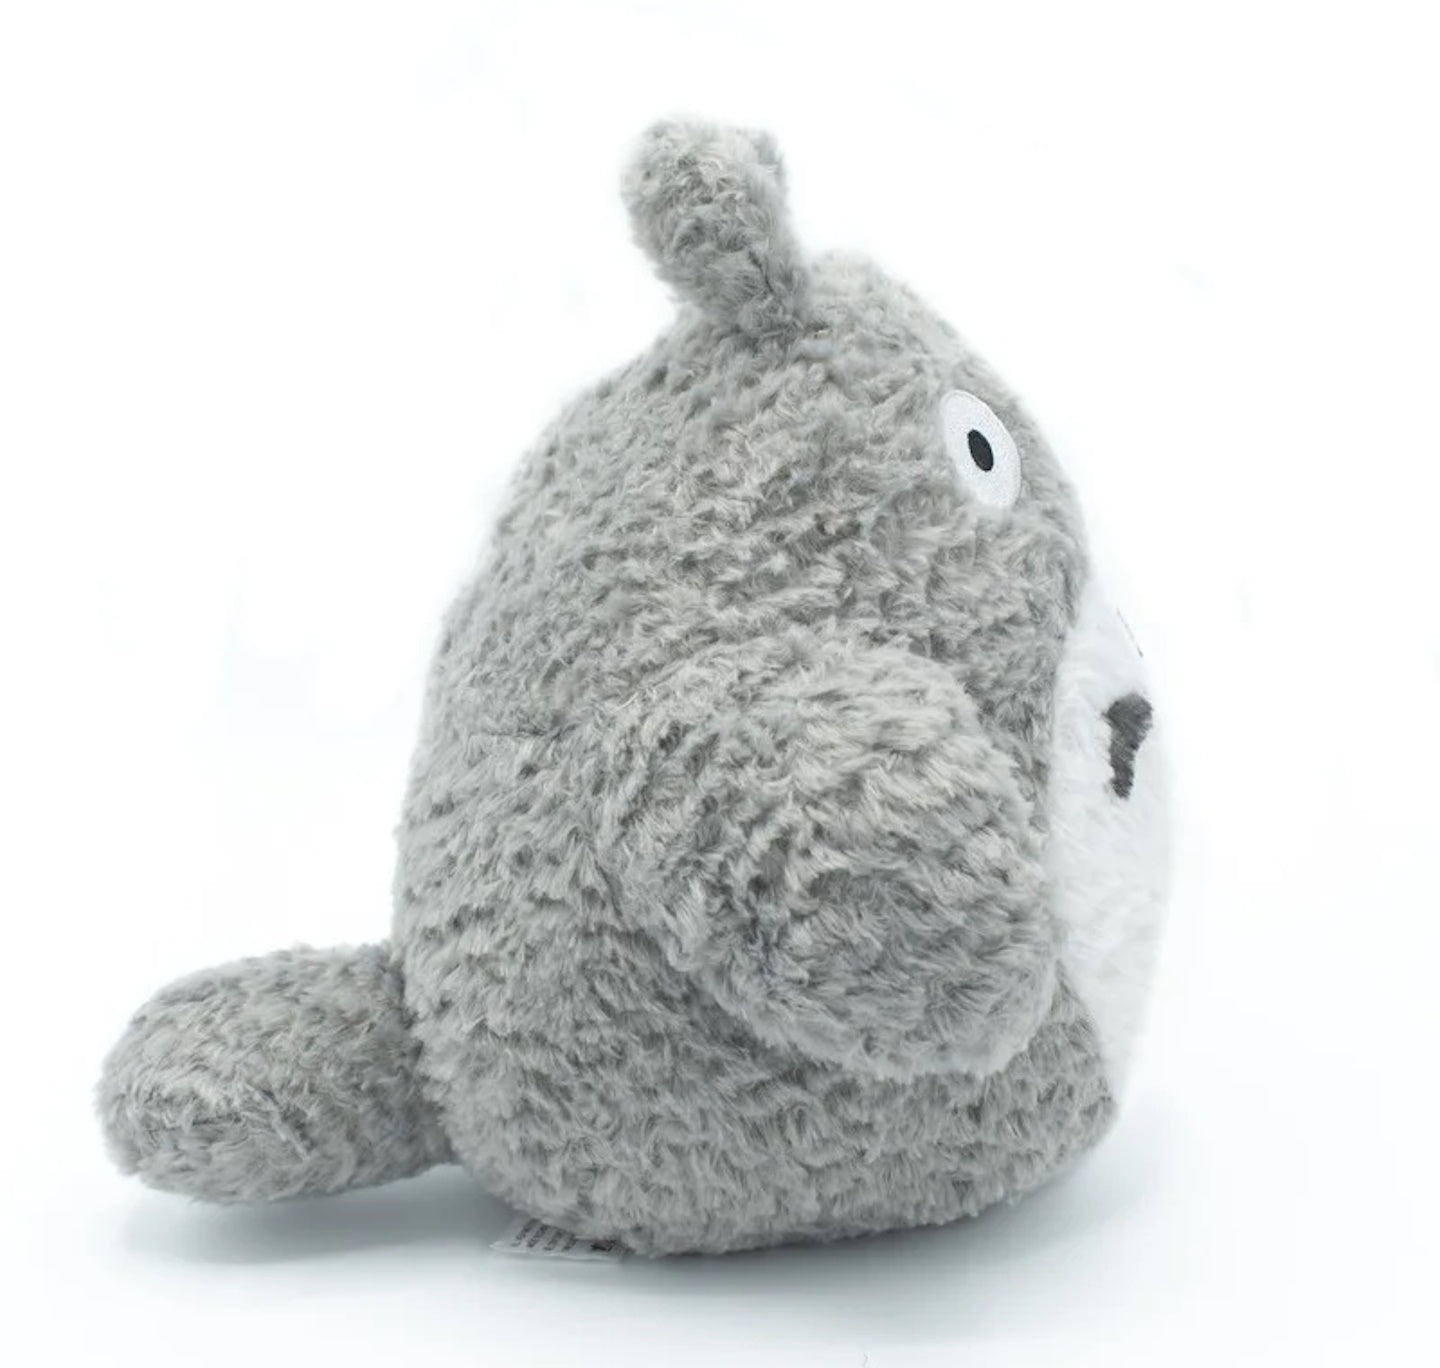 Fluffy Totoro Plush - My Neighbor Totoro